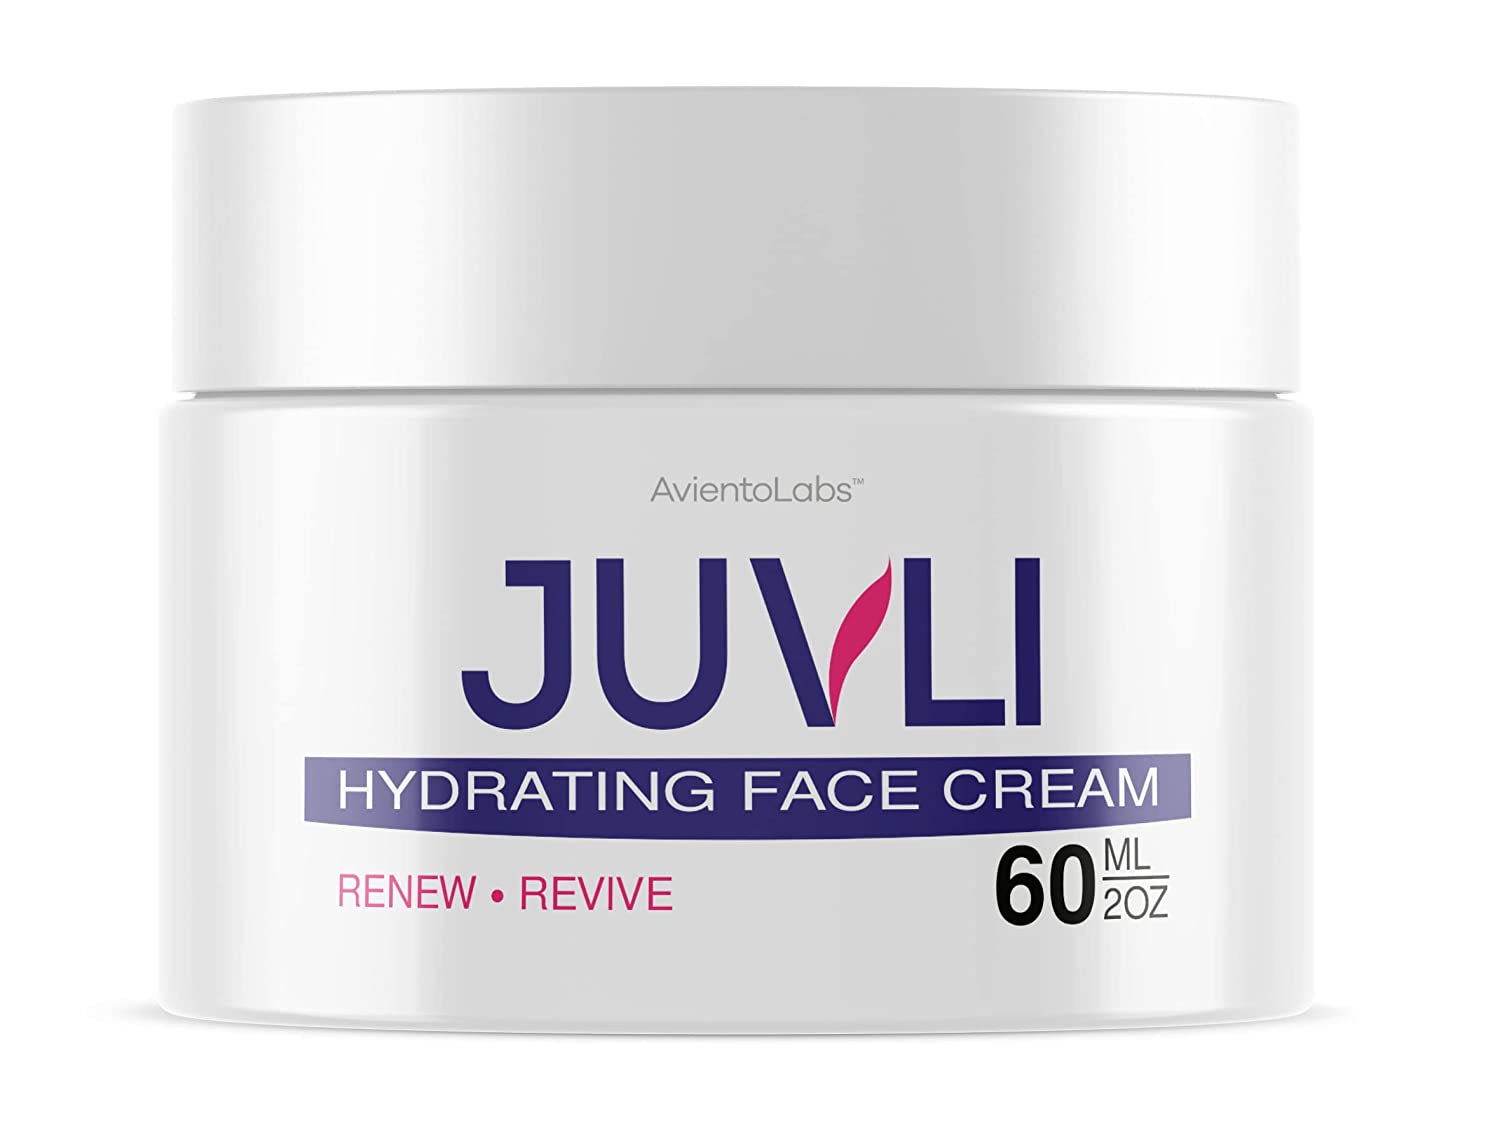 Juvli Hydrating Face Cream.jpg